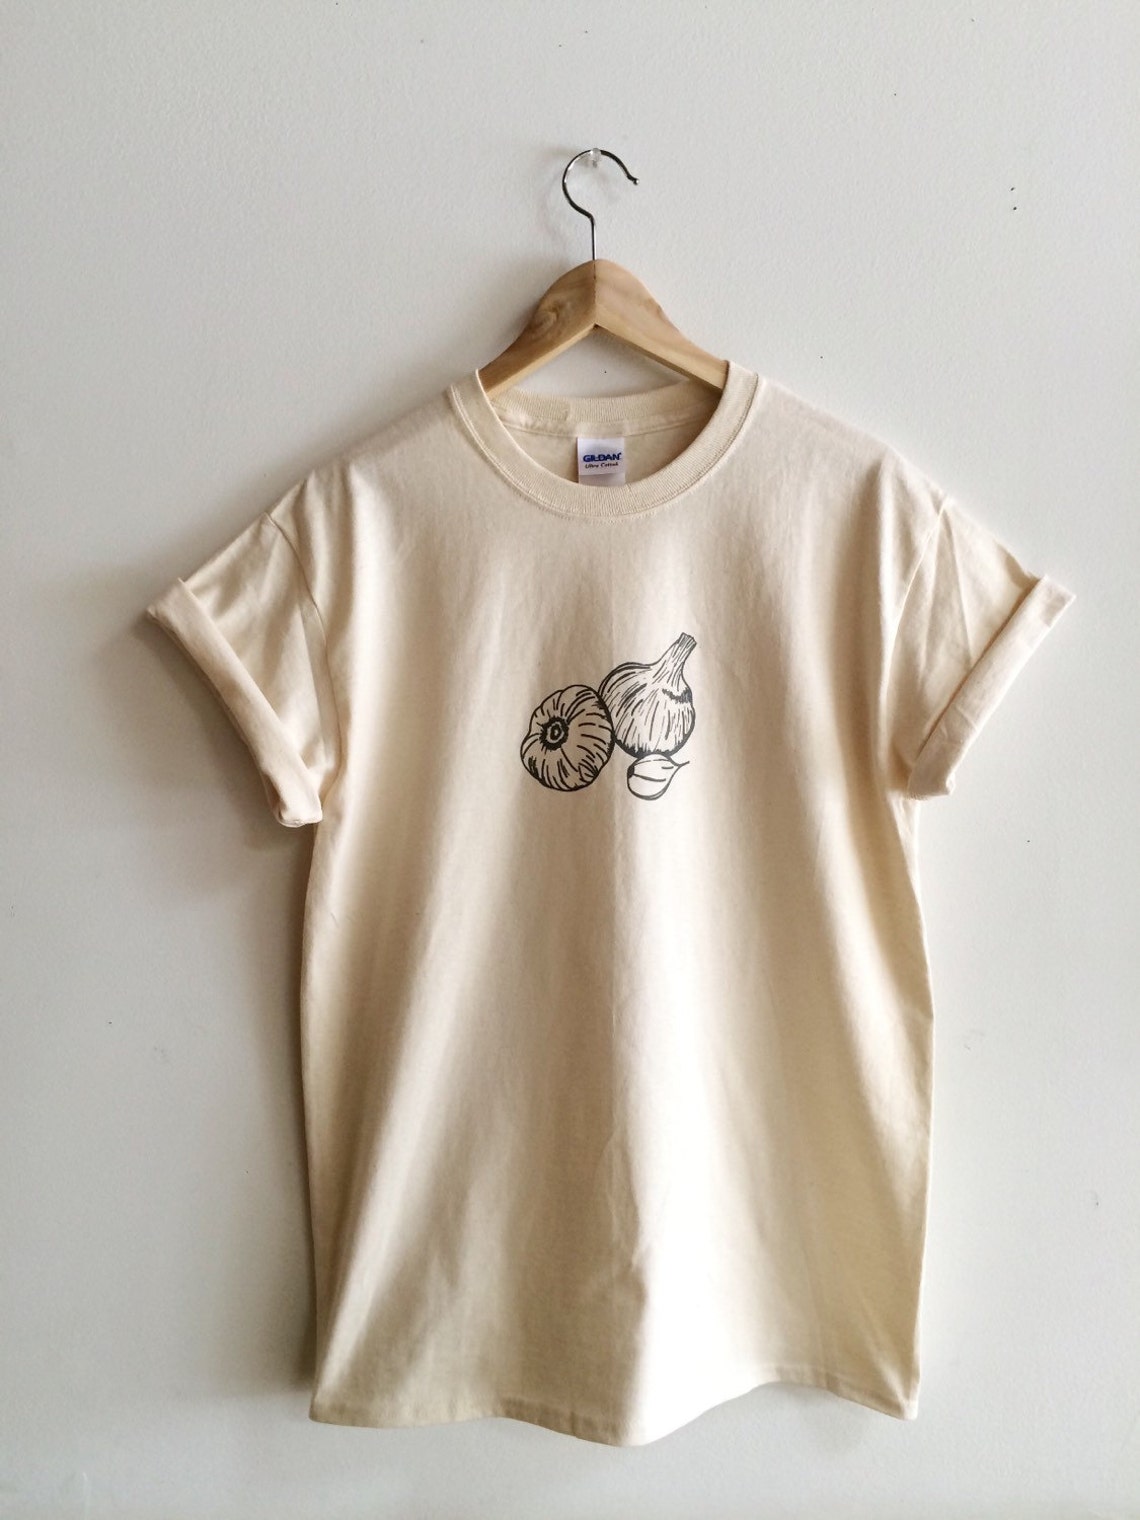 Garlic T-Shirt Garden Shirt Screen Printed T Shirt Clothing | Etsy